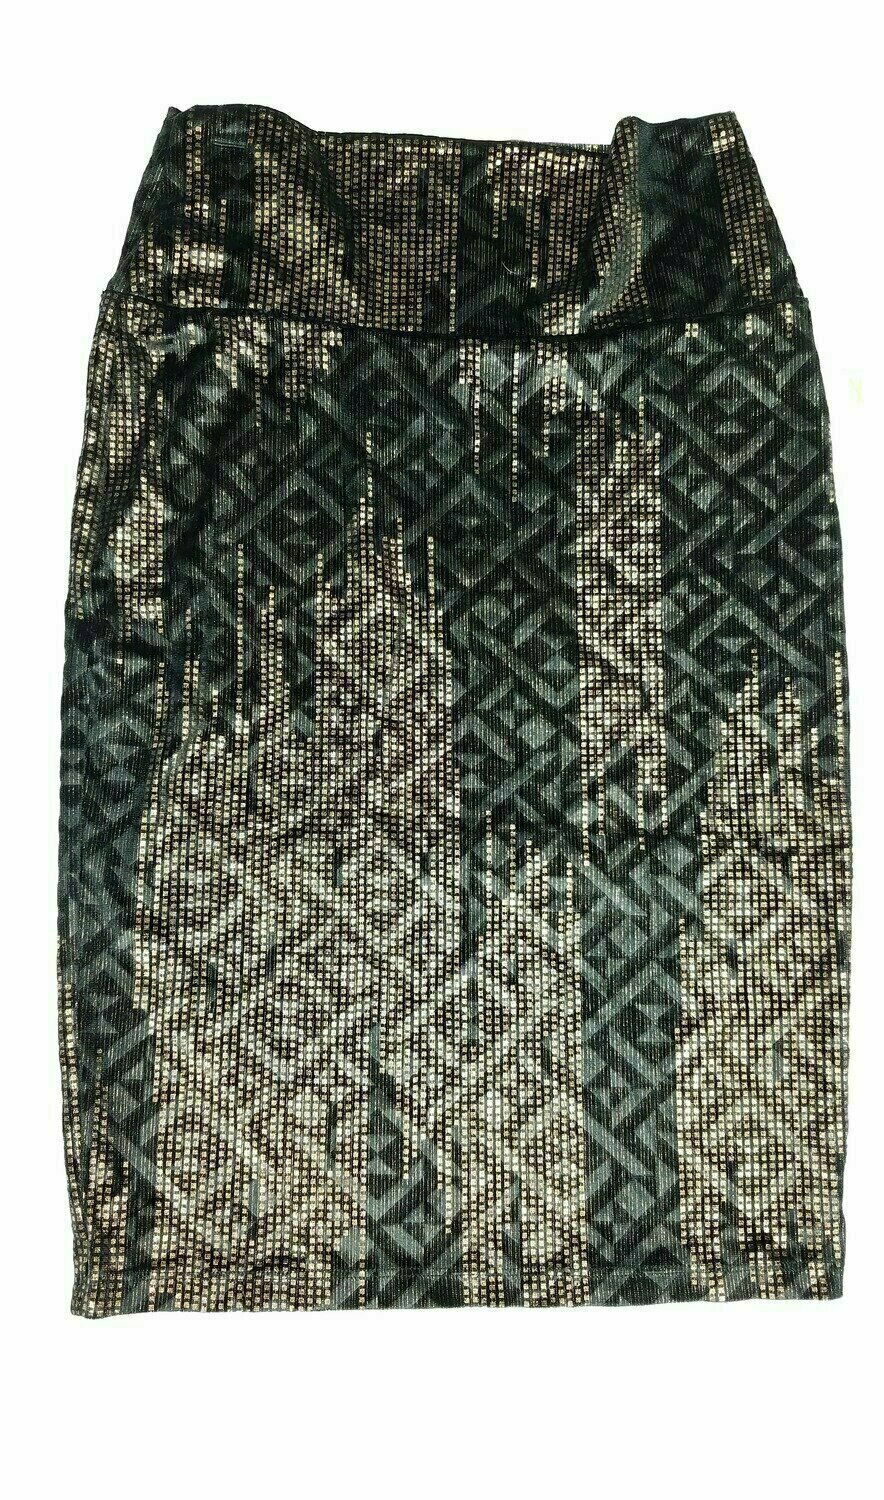 LuLaRoe Cassie b X-Small XS Elegant collection Geometric Black Gold Silver Womens Knee Length Pencil Skirt fits sizes 2-4 XS-57